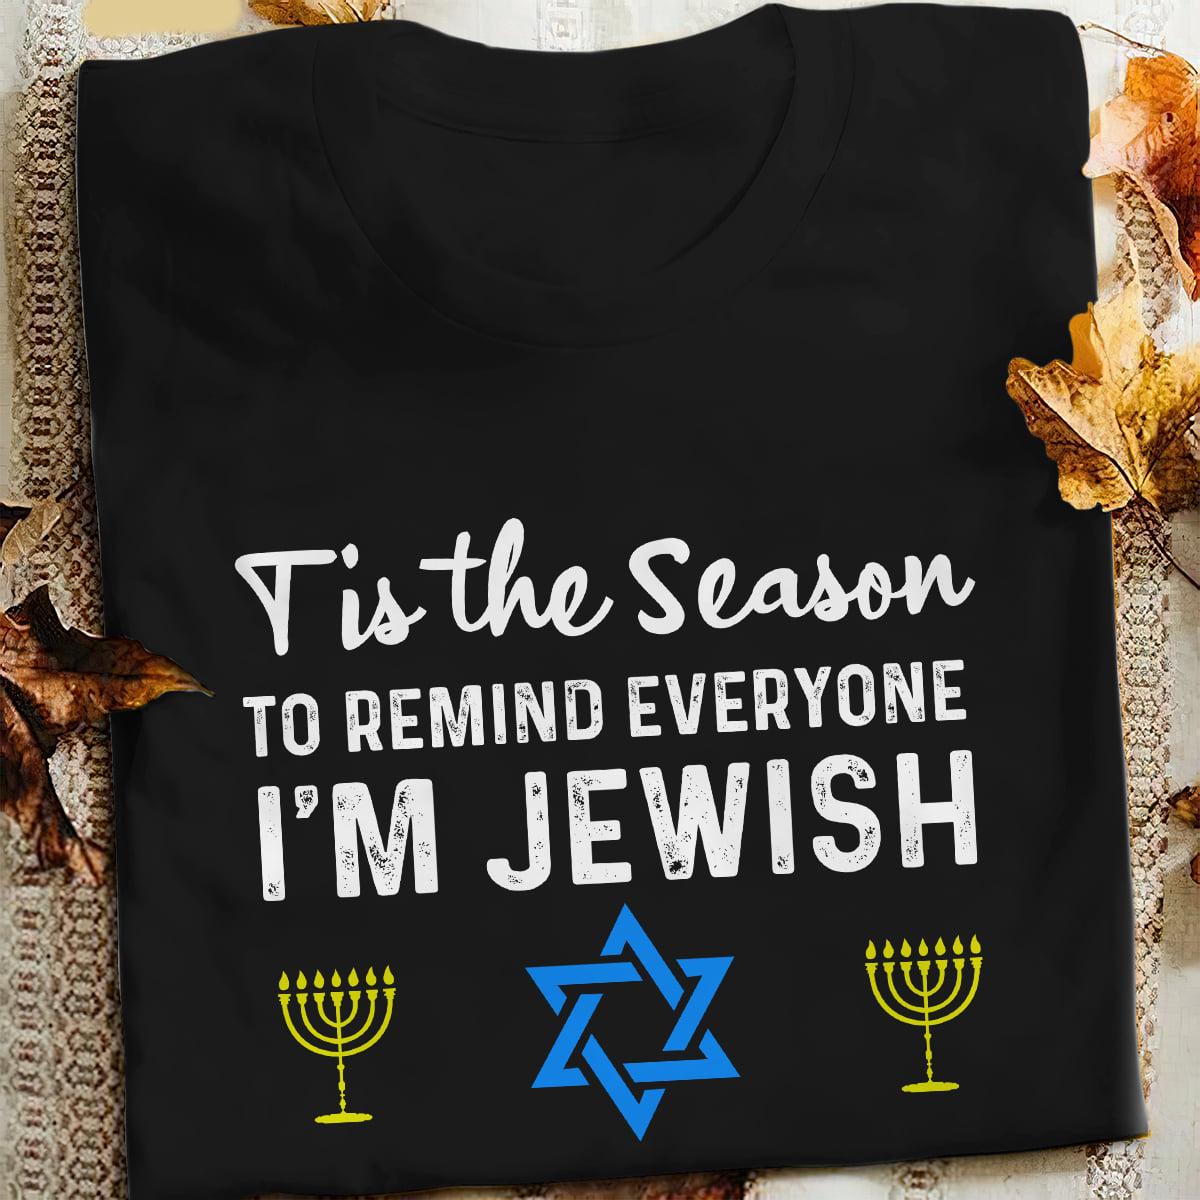 Tis the season to remind everyone I'm Jewish - Thanksgiving gift for Jewish, Happy Thanksgiving